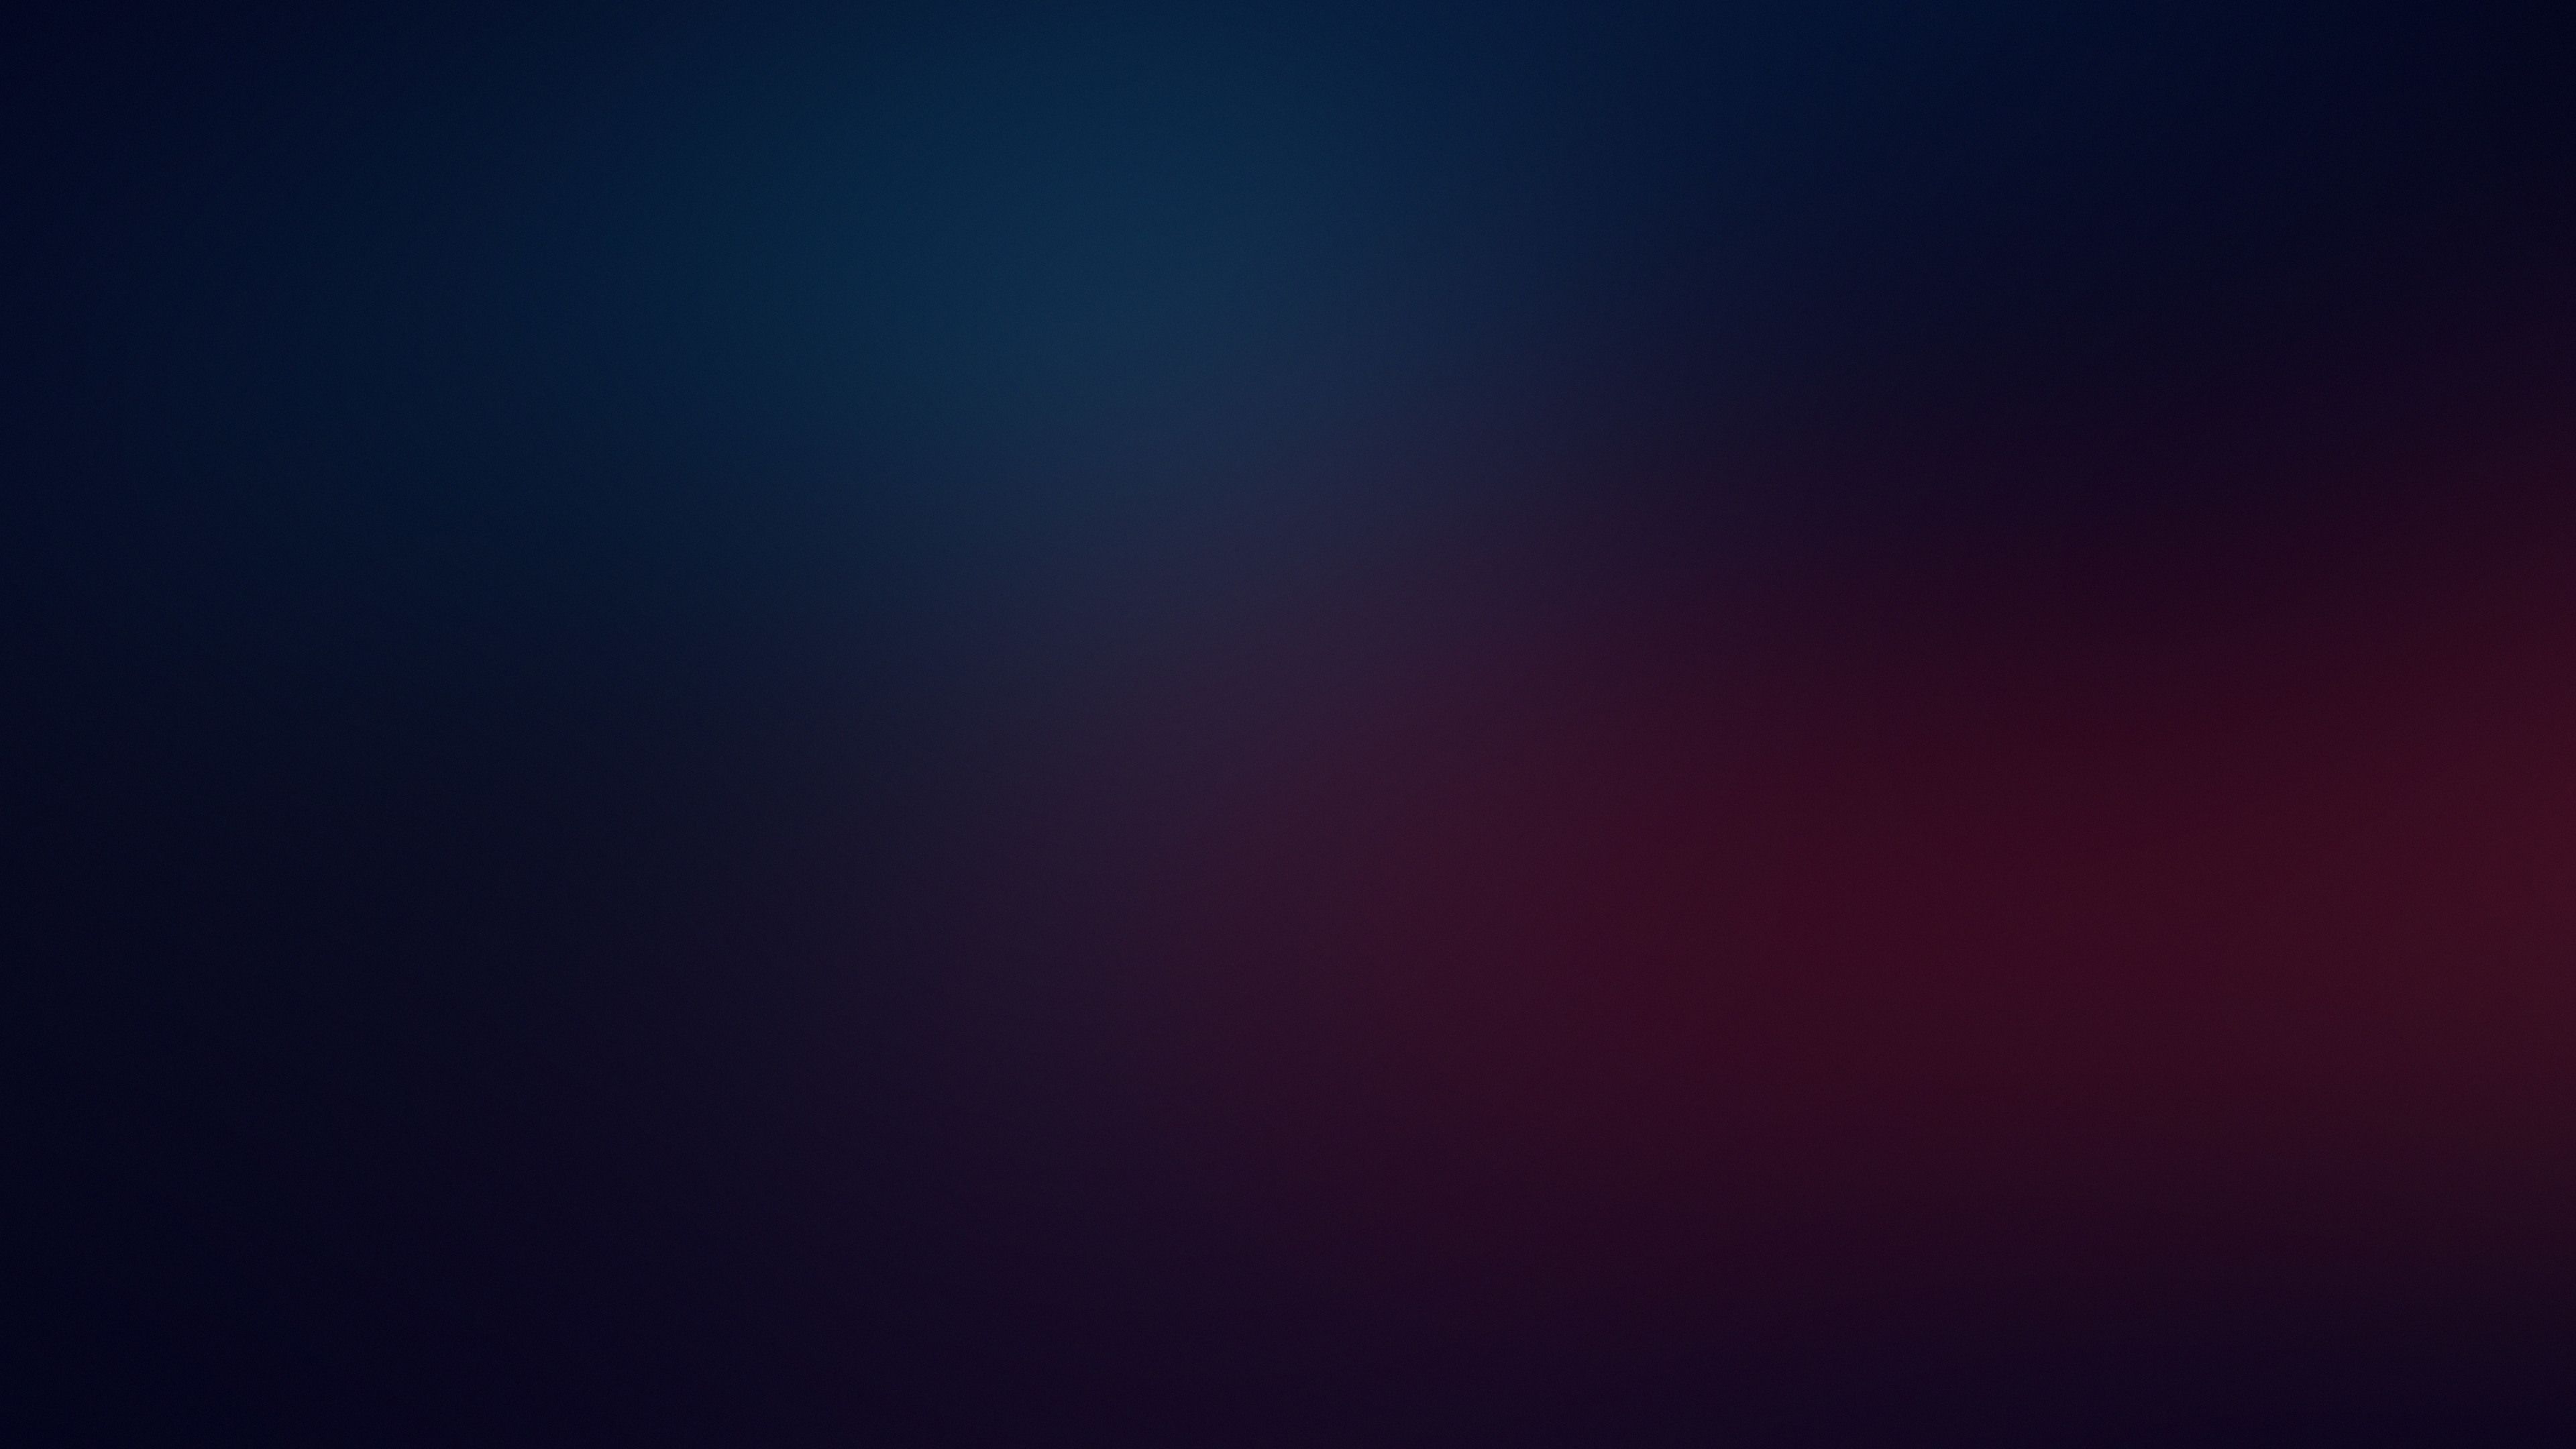 Dark Blur Abstract 4k Hd Wallpaper